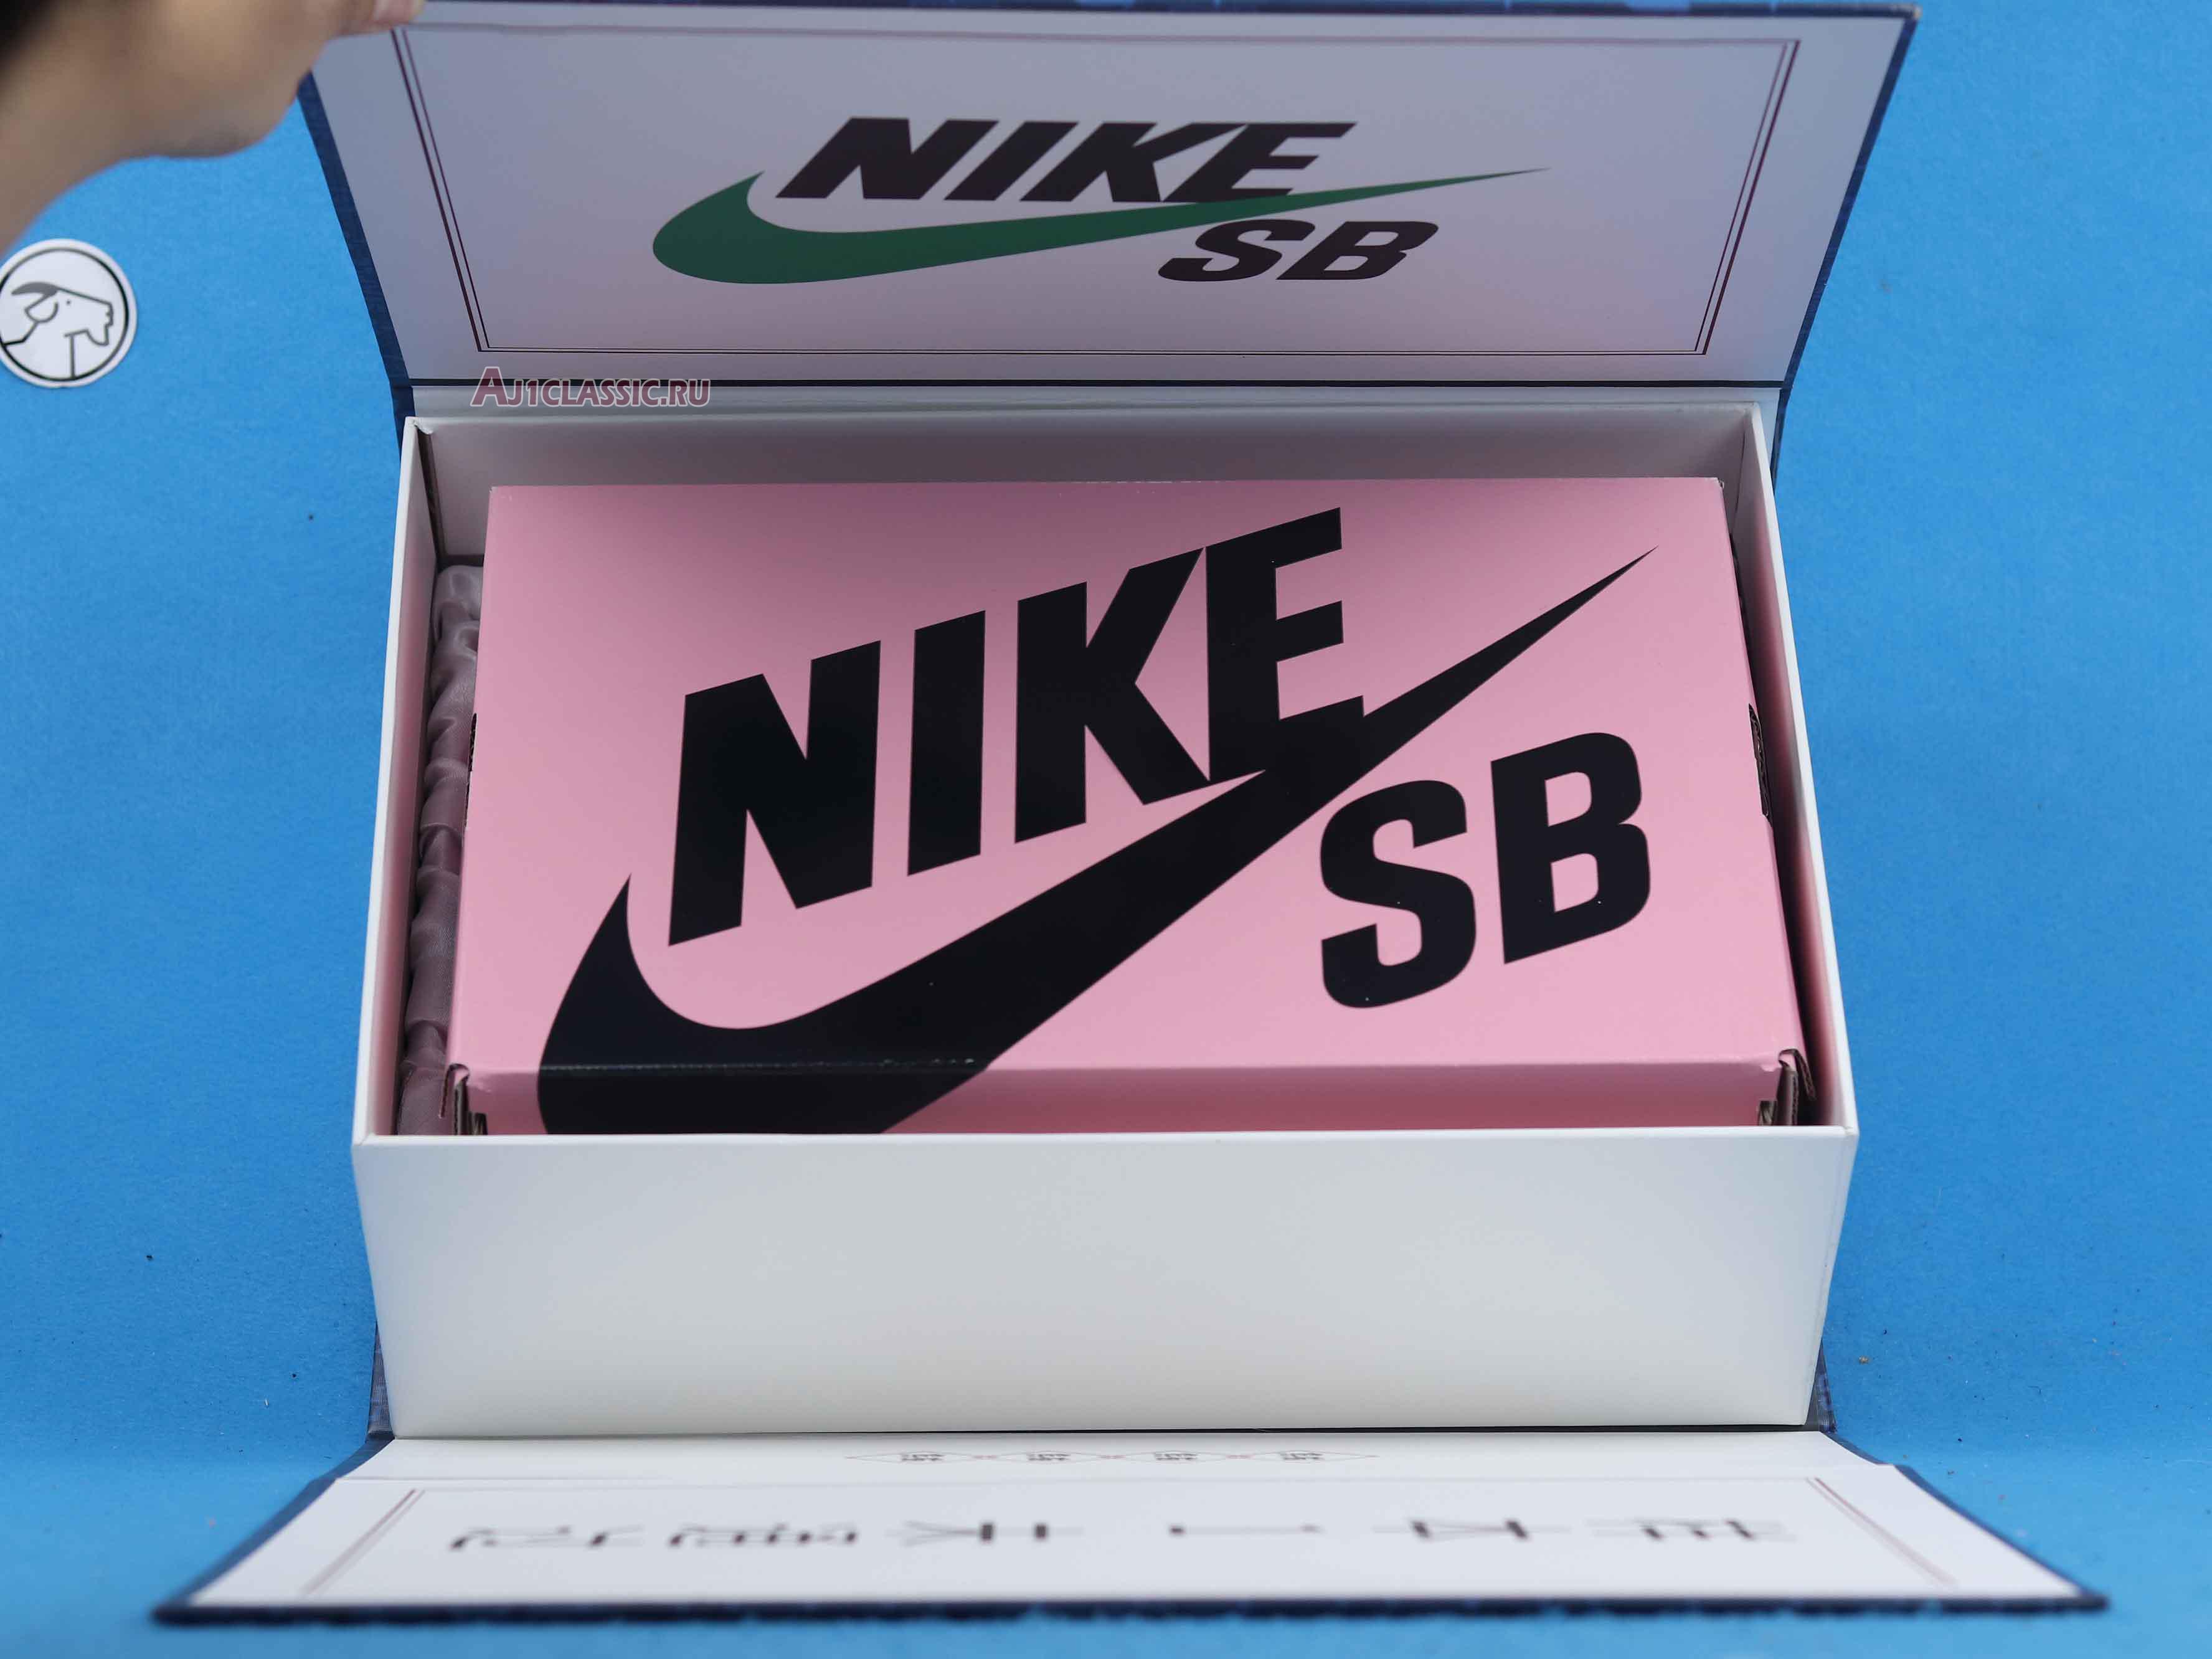 Nike Jeff Staple x Dunk Low Pro SB "Panda Pigeon" Special Box BV1310-013